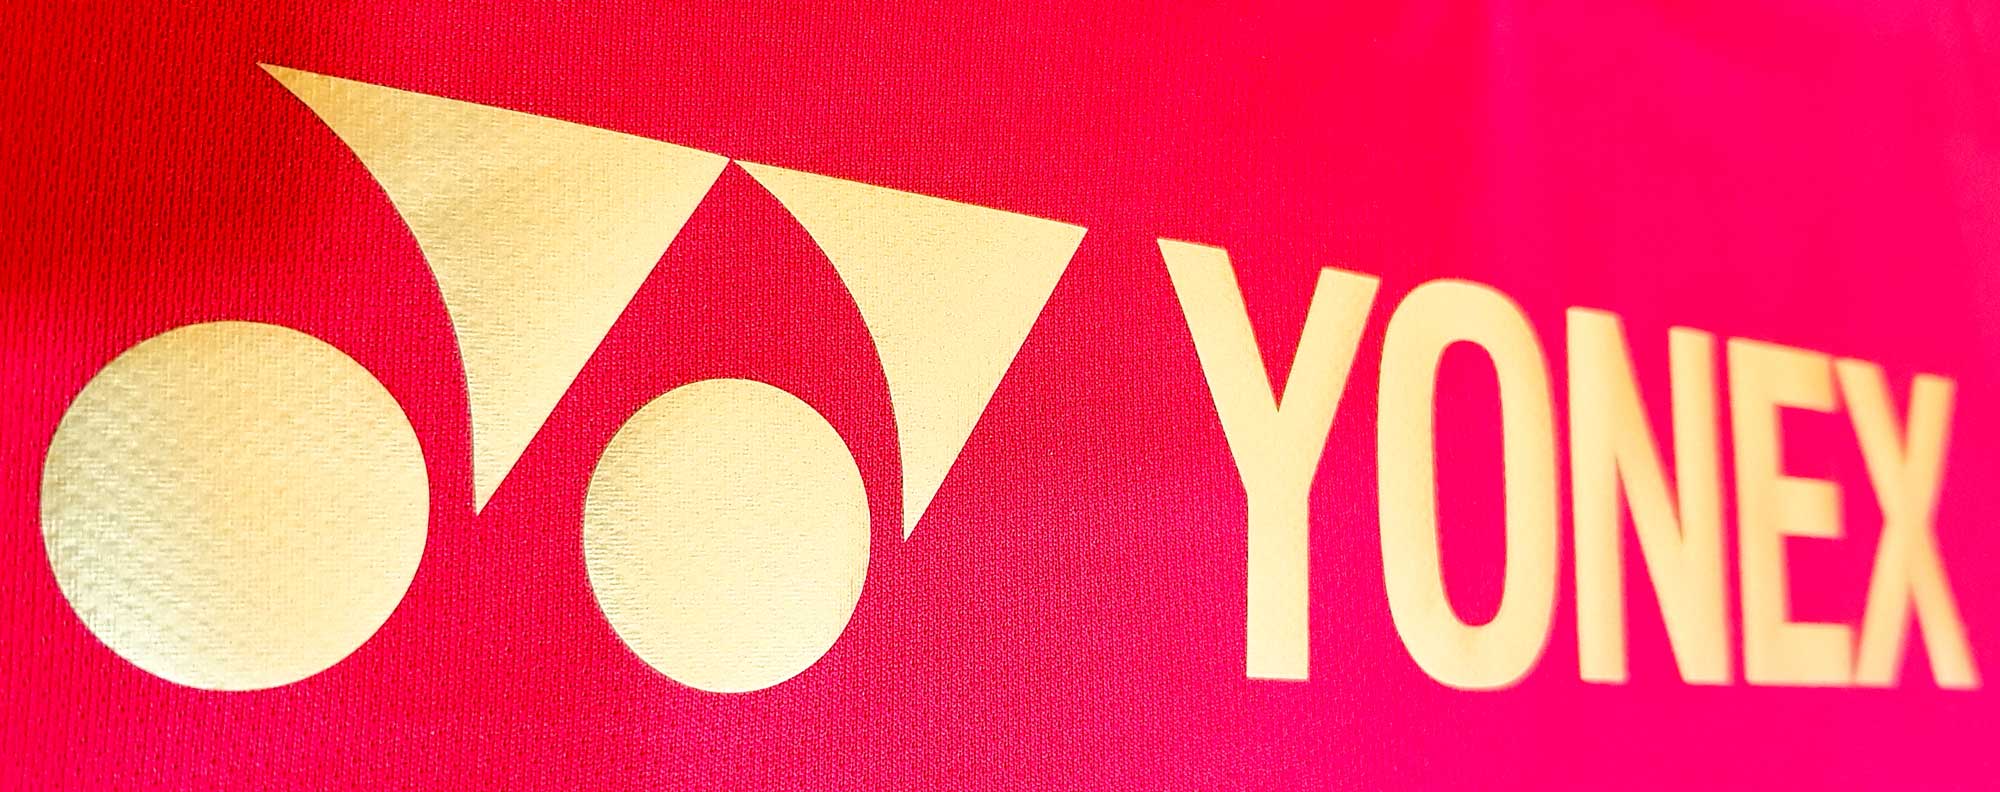 Yonex shirt - Yonex Gold close look front